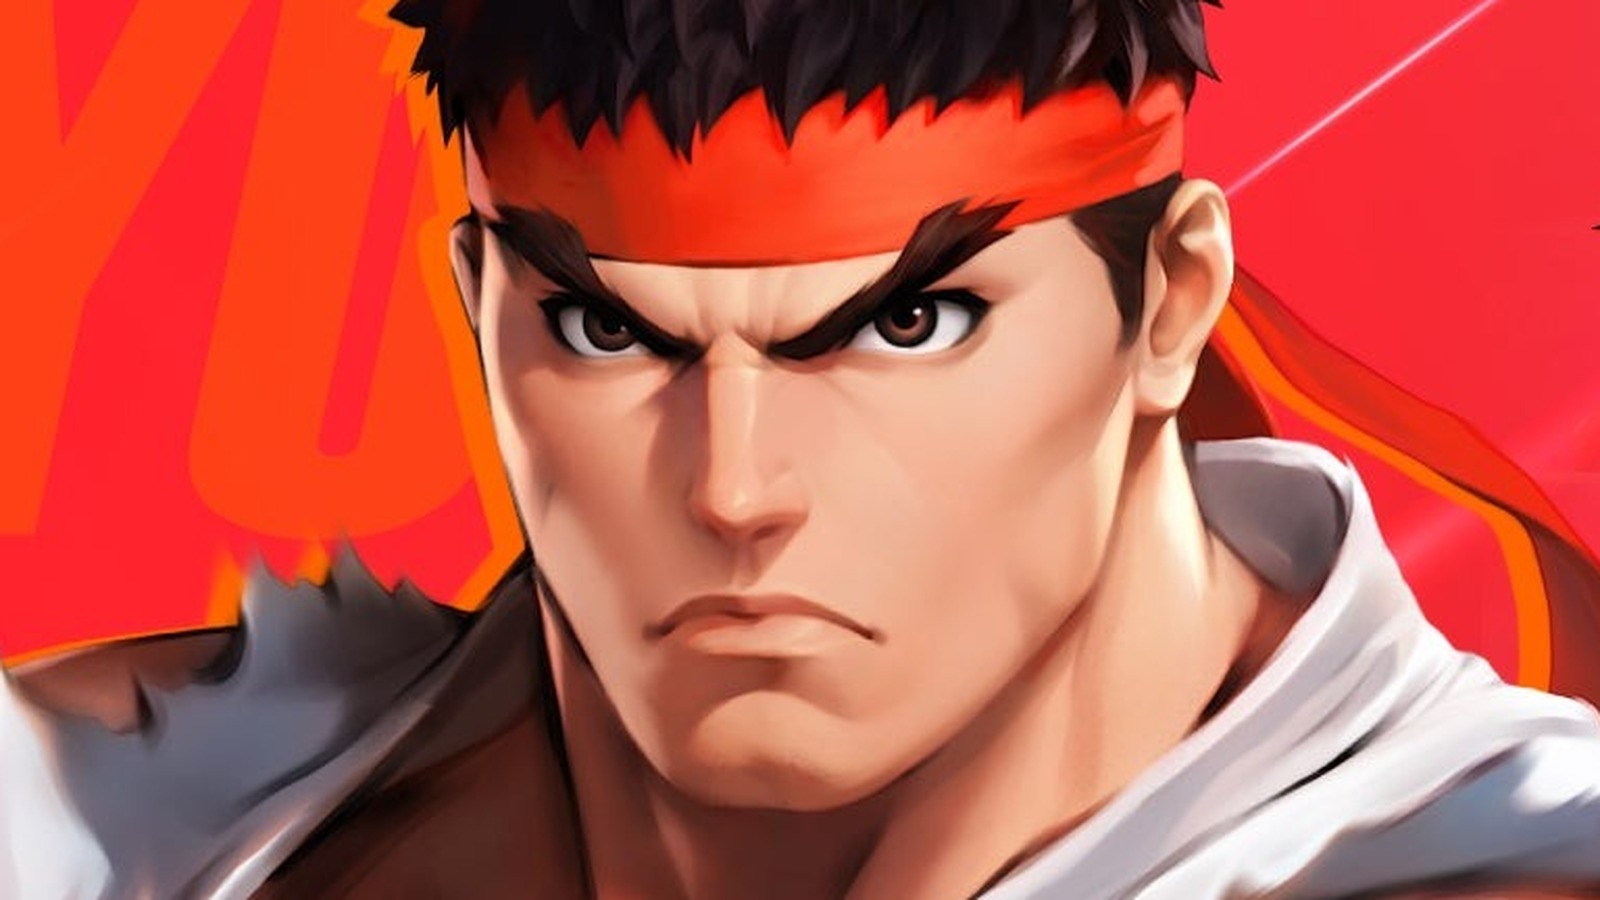 Street Fighter Galleries: Street Fighter Duel: Series 1